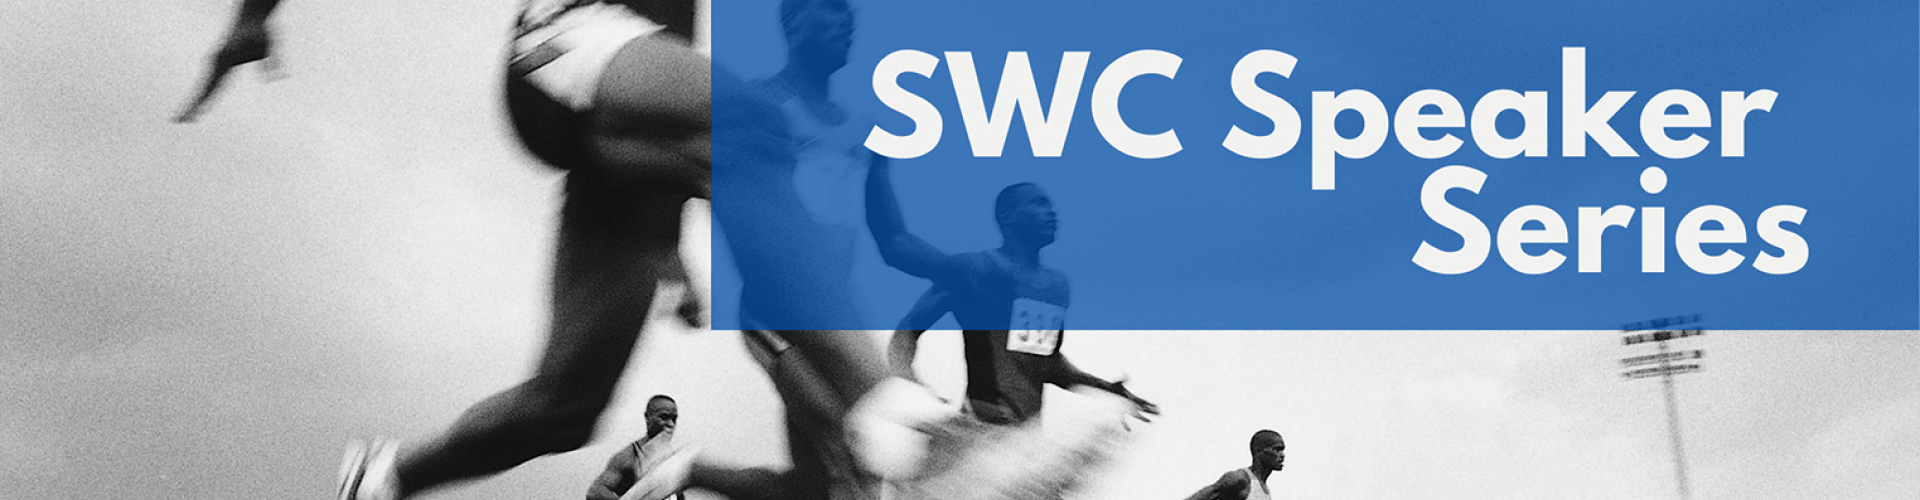 SWC Speaker series - Dr Savio Chan - Blog Banner